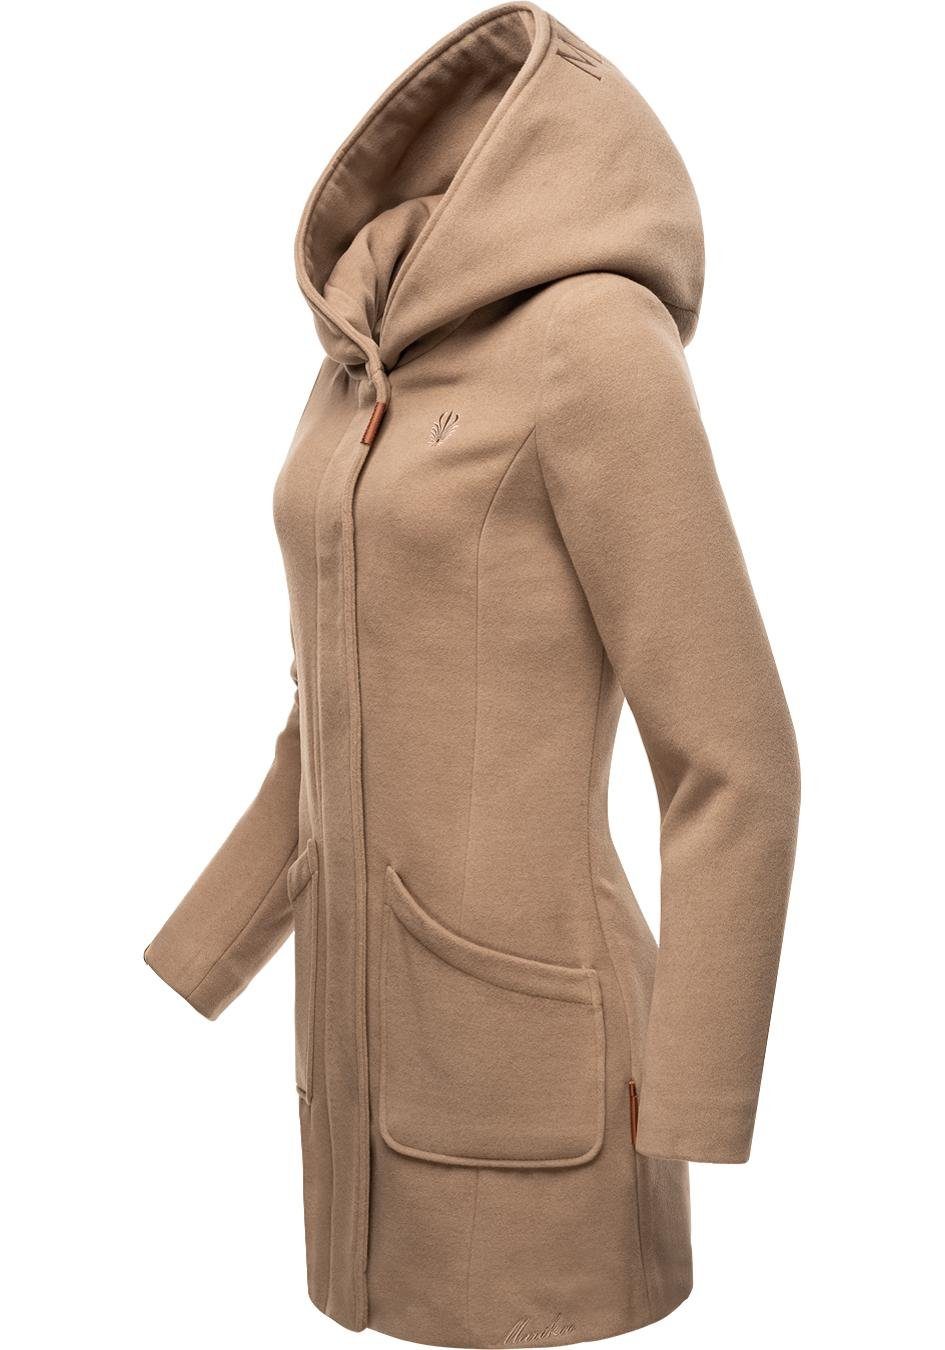 Marikoo Wintermantel Maikoo hochwertiger Mantel mit Kapuze großer taupe